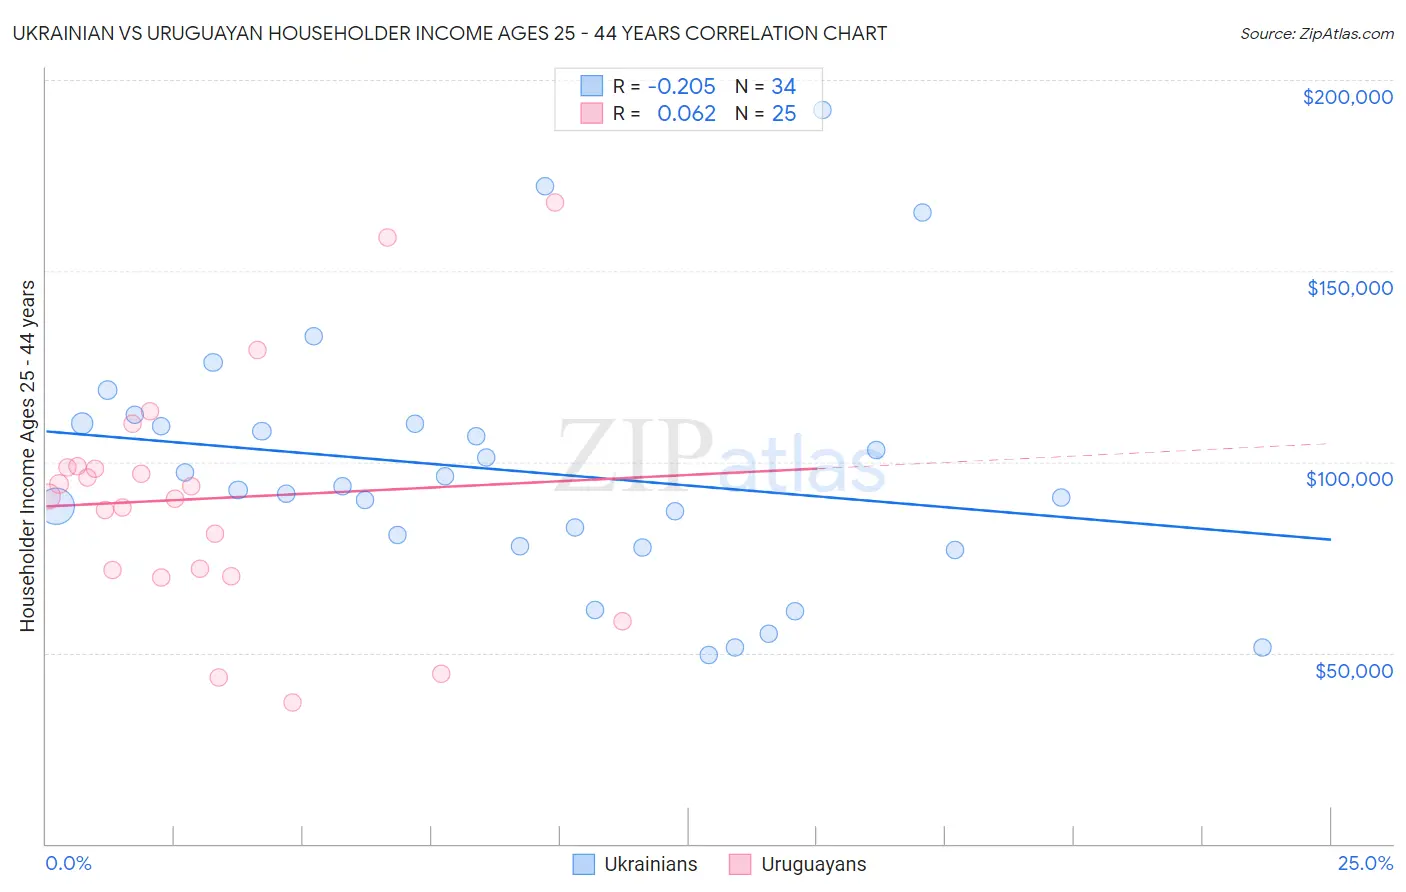 Ukrainian vs Uruguayan Householder Income Ages 25 - 44 years